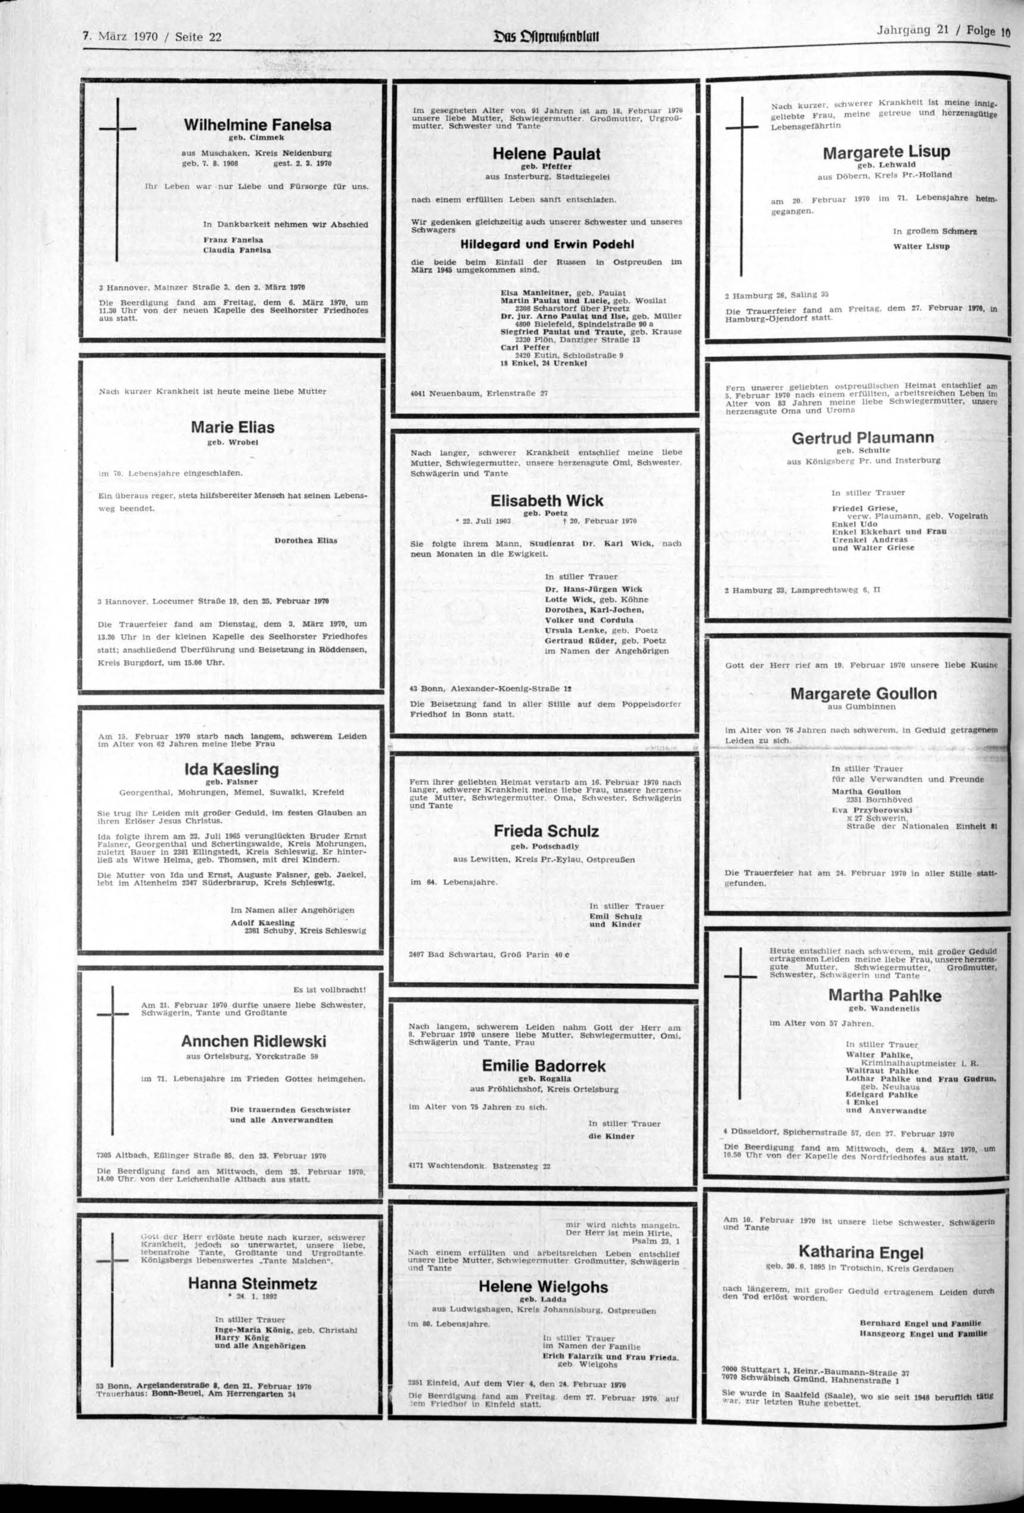 i 7 März 1970 Seite 22 IM5 Cfipmirunblall Jahrgang 21 Folge 10 Wilhelmine